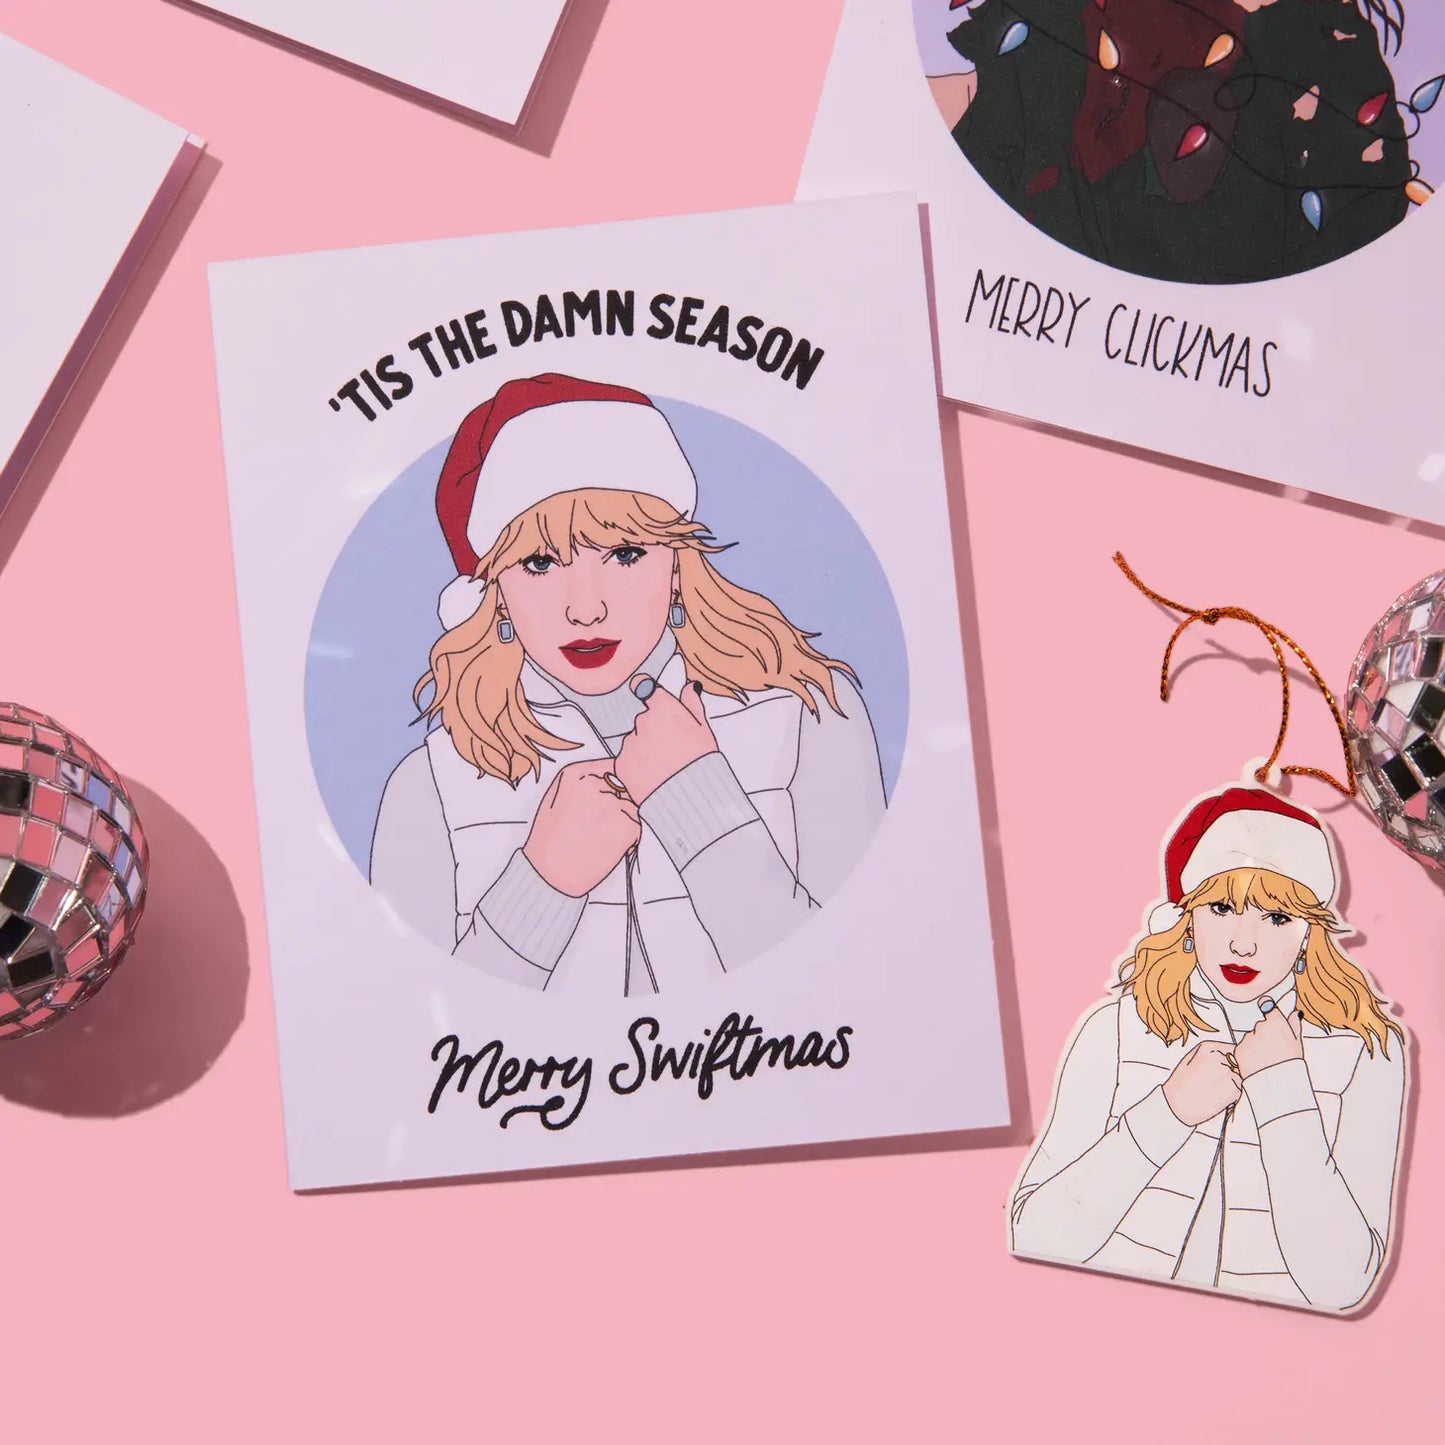 'Tis the Damn Season Taylor Christmas Card